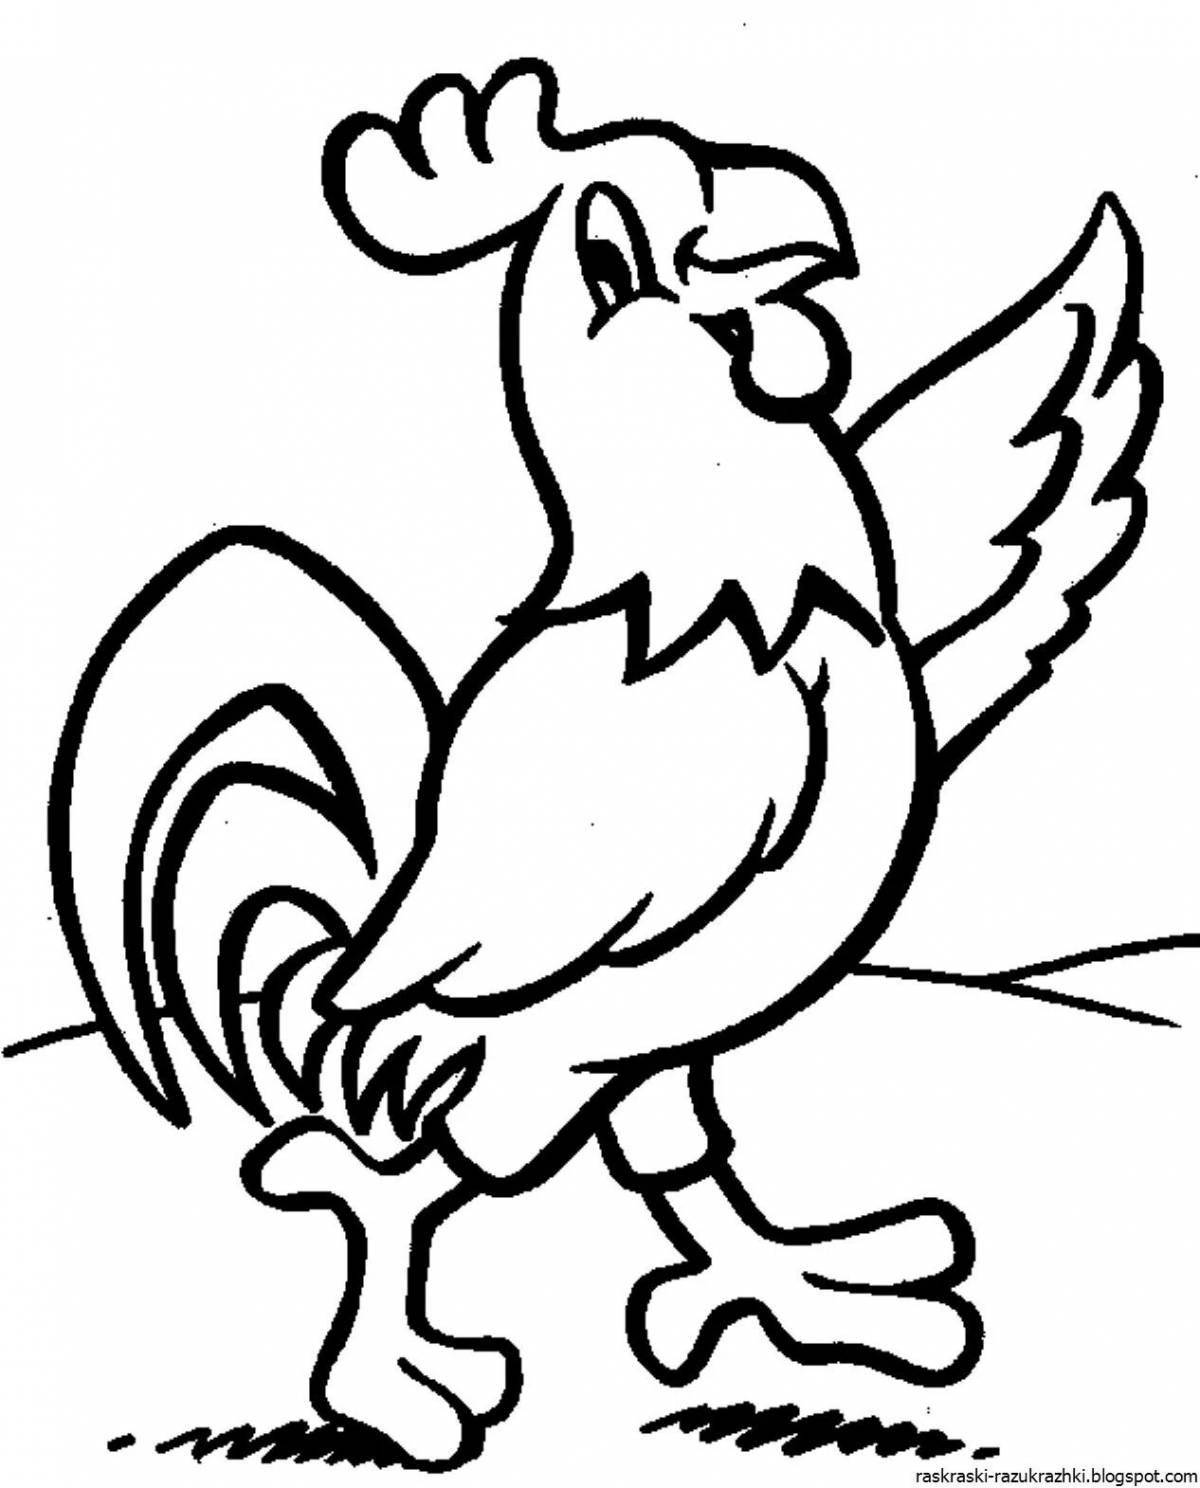 Adorable cockerel drawing